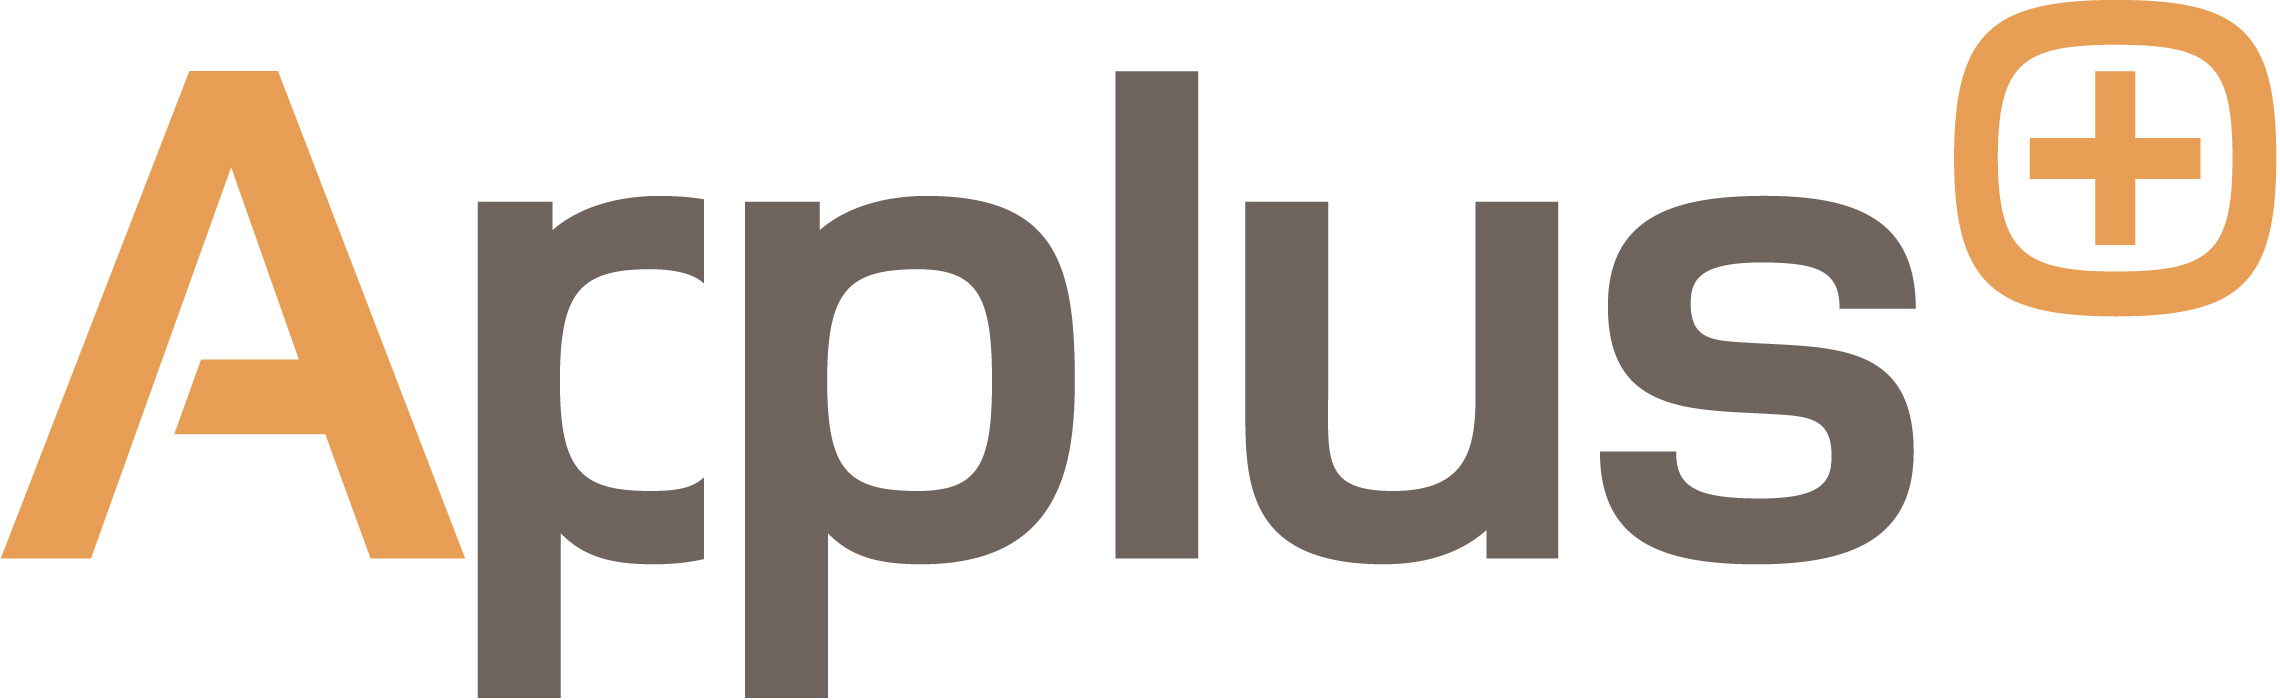 Applus - Certified quality